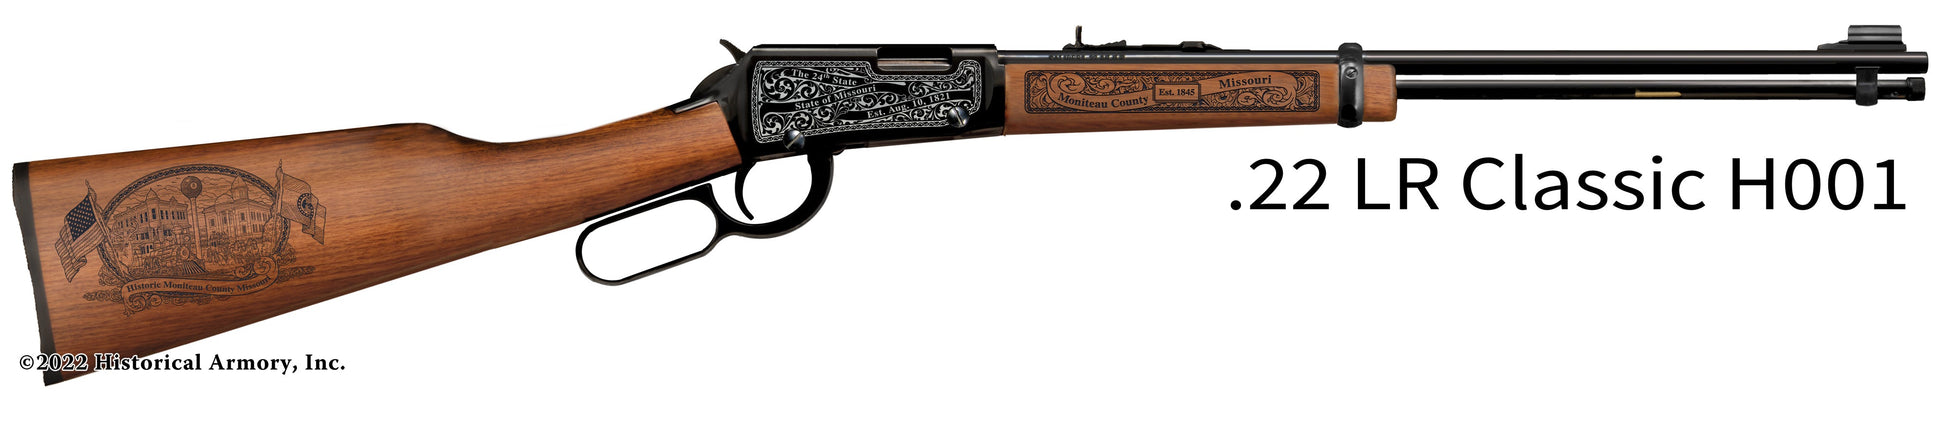 Moniteau County Missouri Engraved Henry H001 Rifle